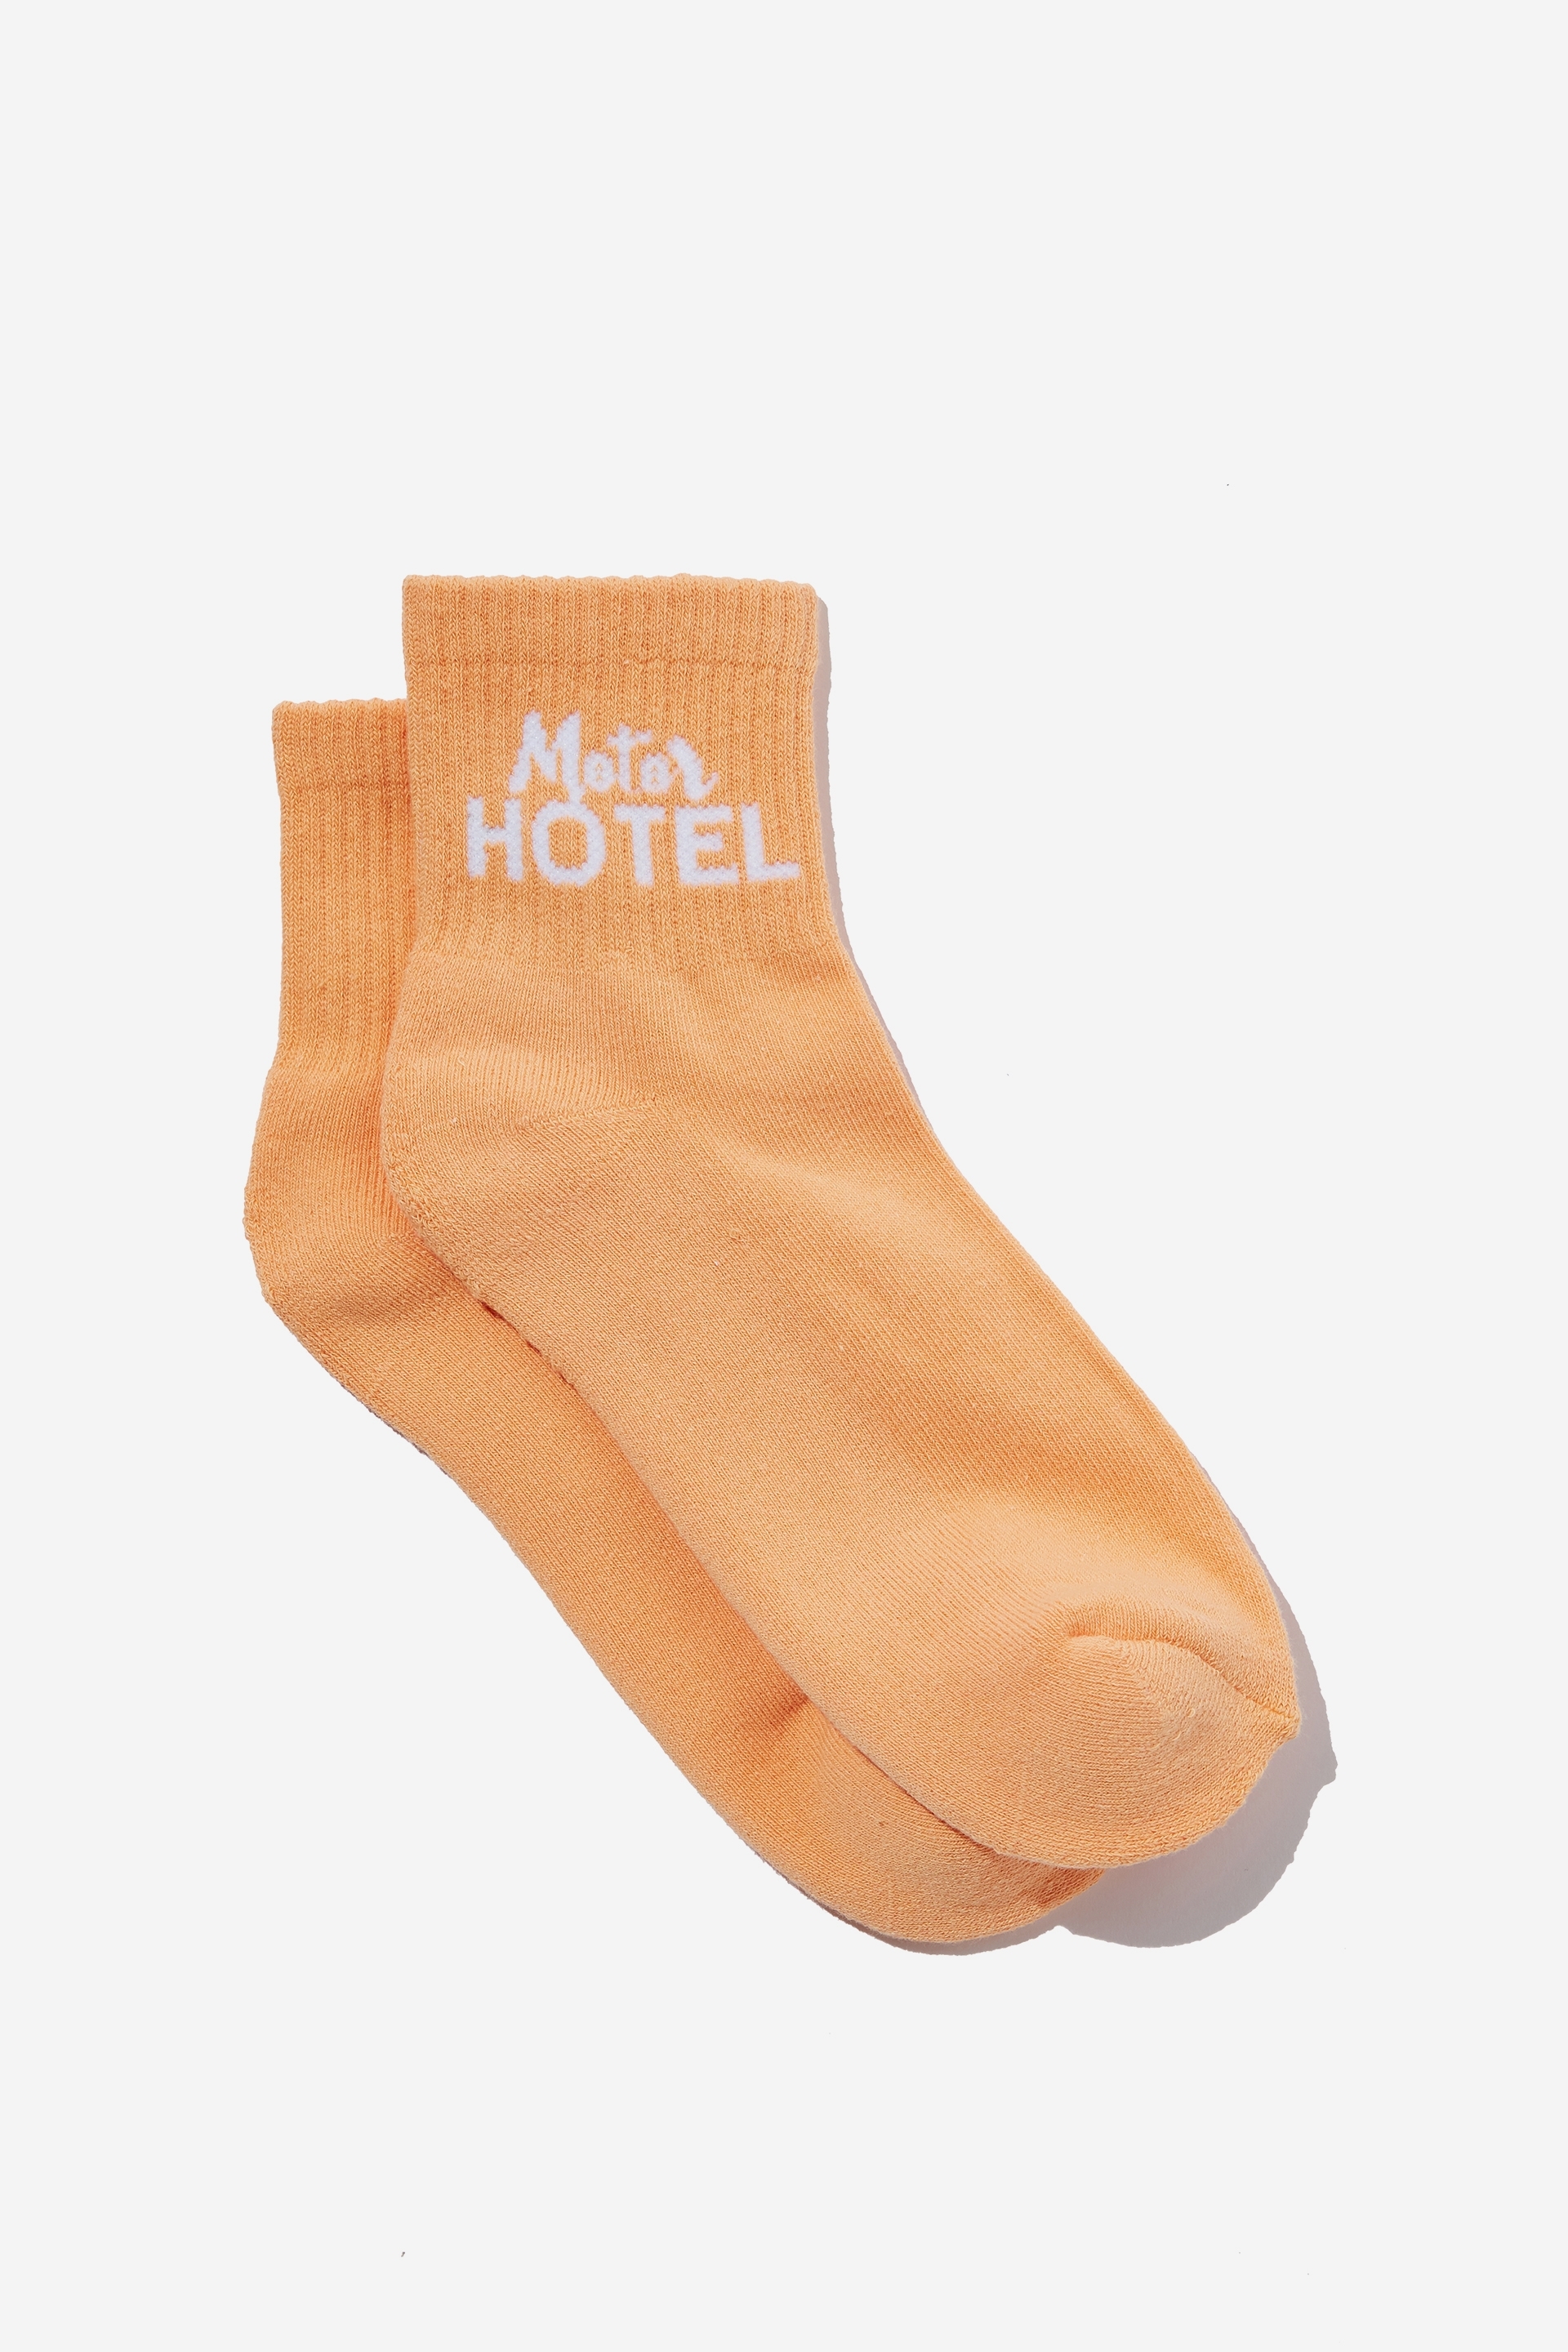 Rubi - Club House Quarter Crew Sock - Orange sand/motor hotel